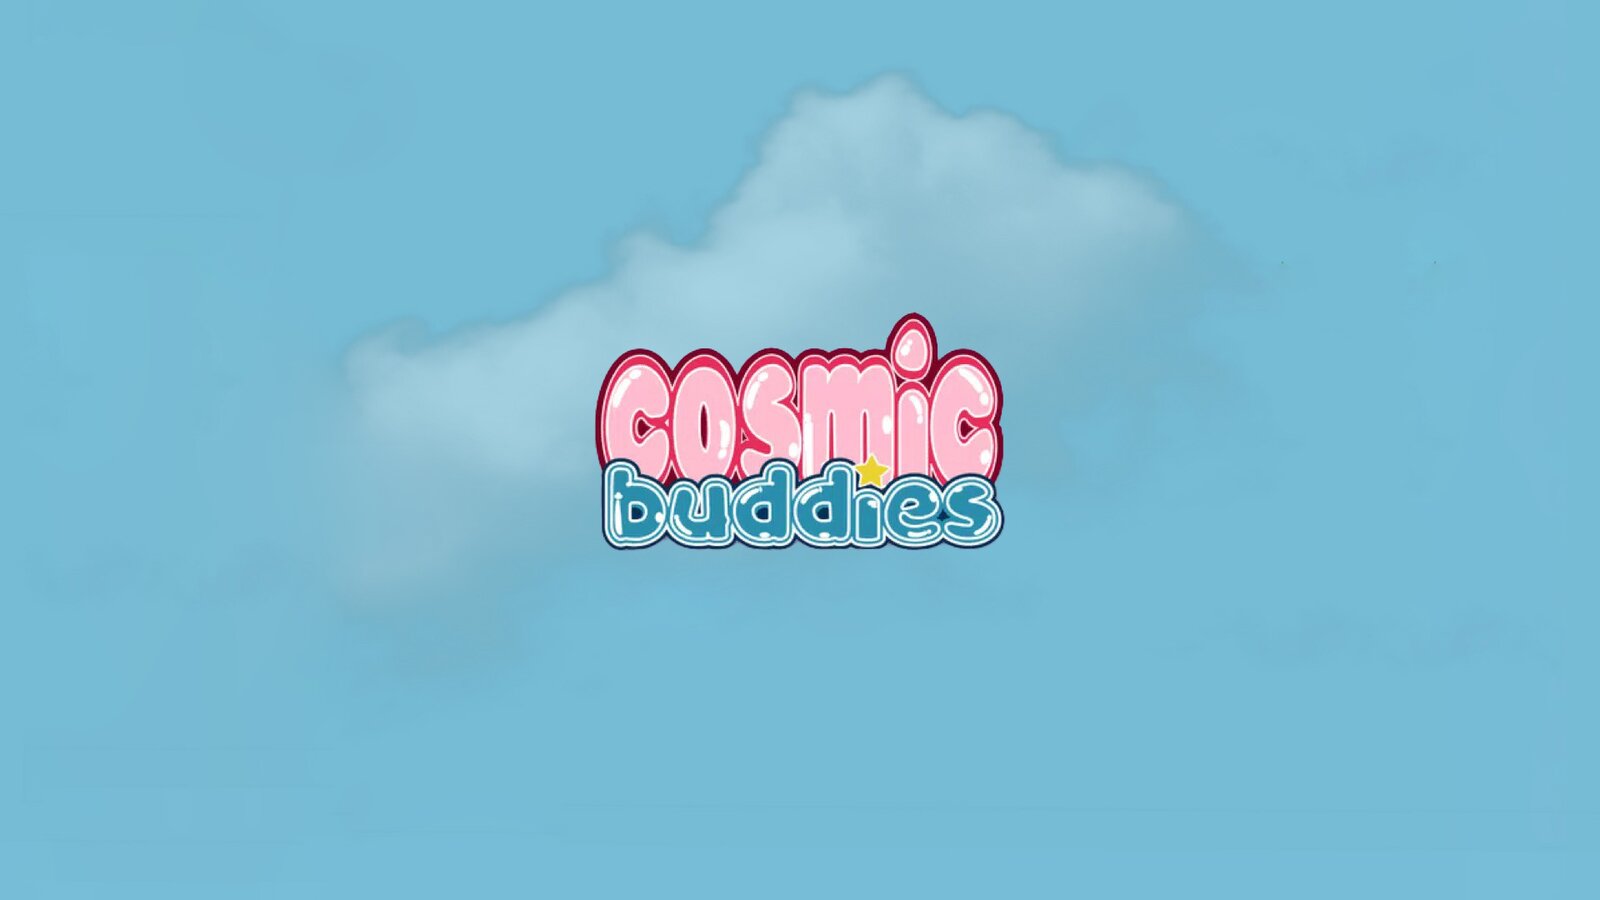 Cosmic Buddies Town